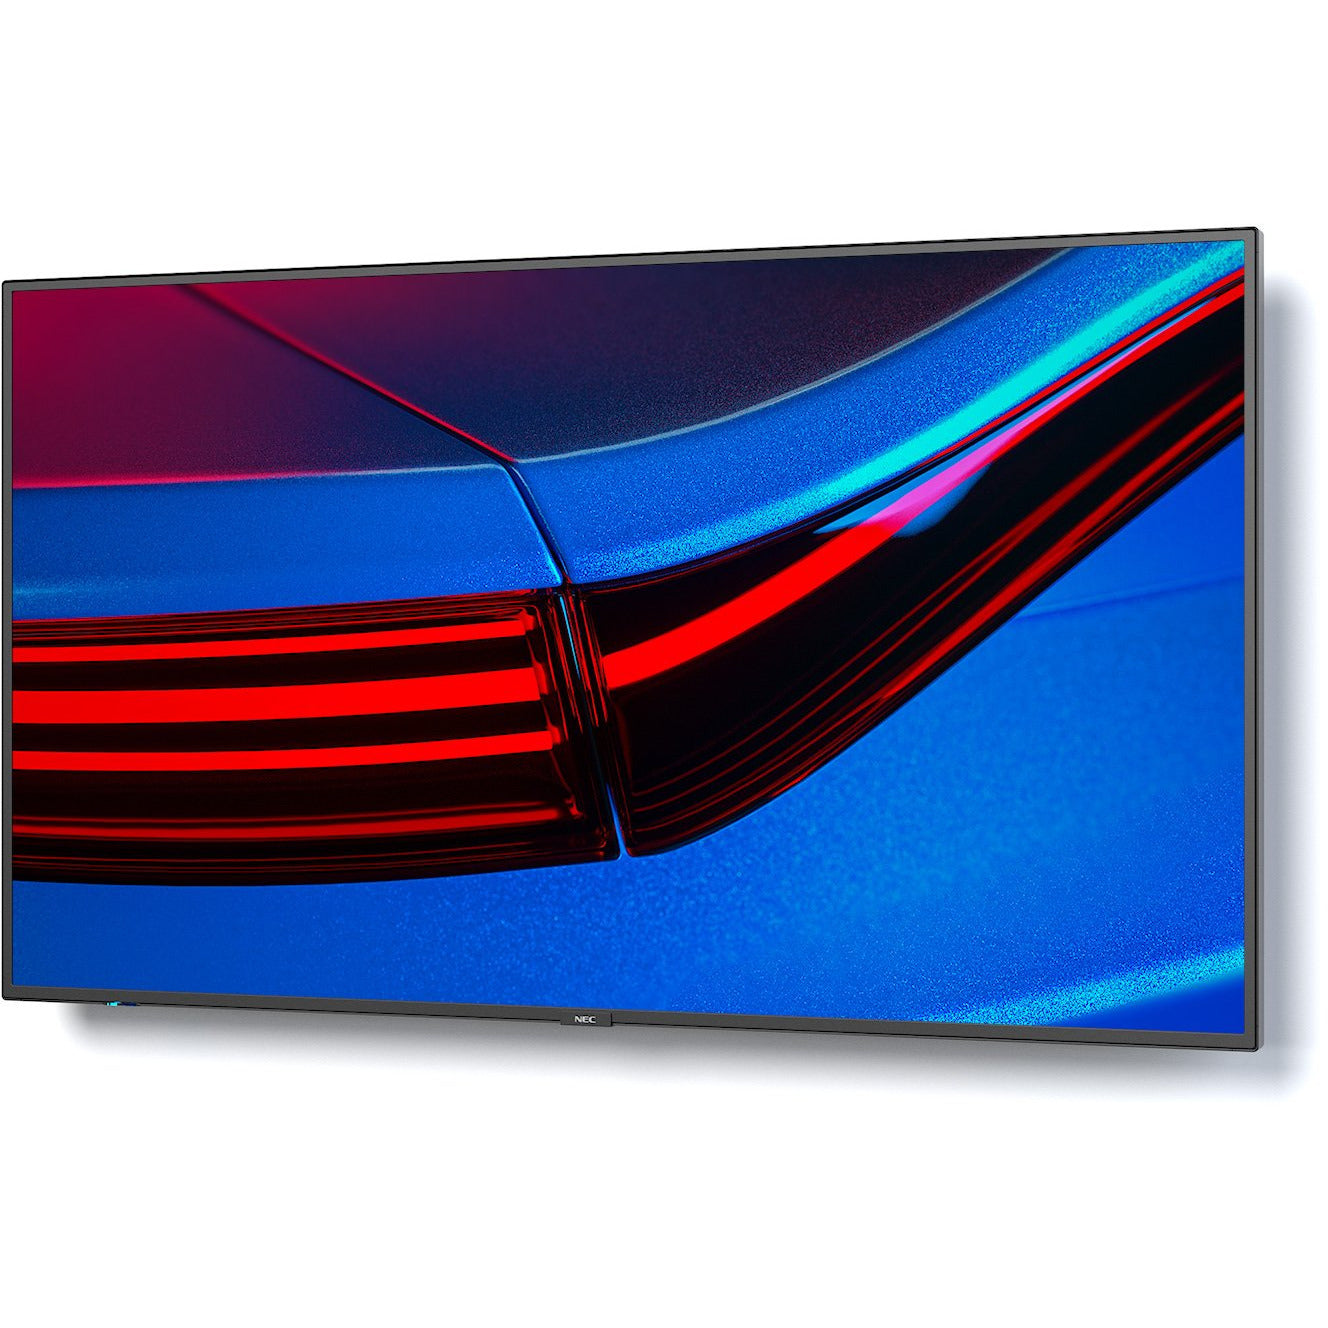 NEC MultiSync® P555 LCD 55" Professional Large Format Display